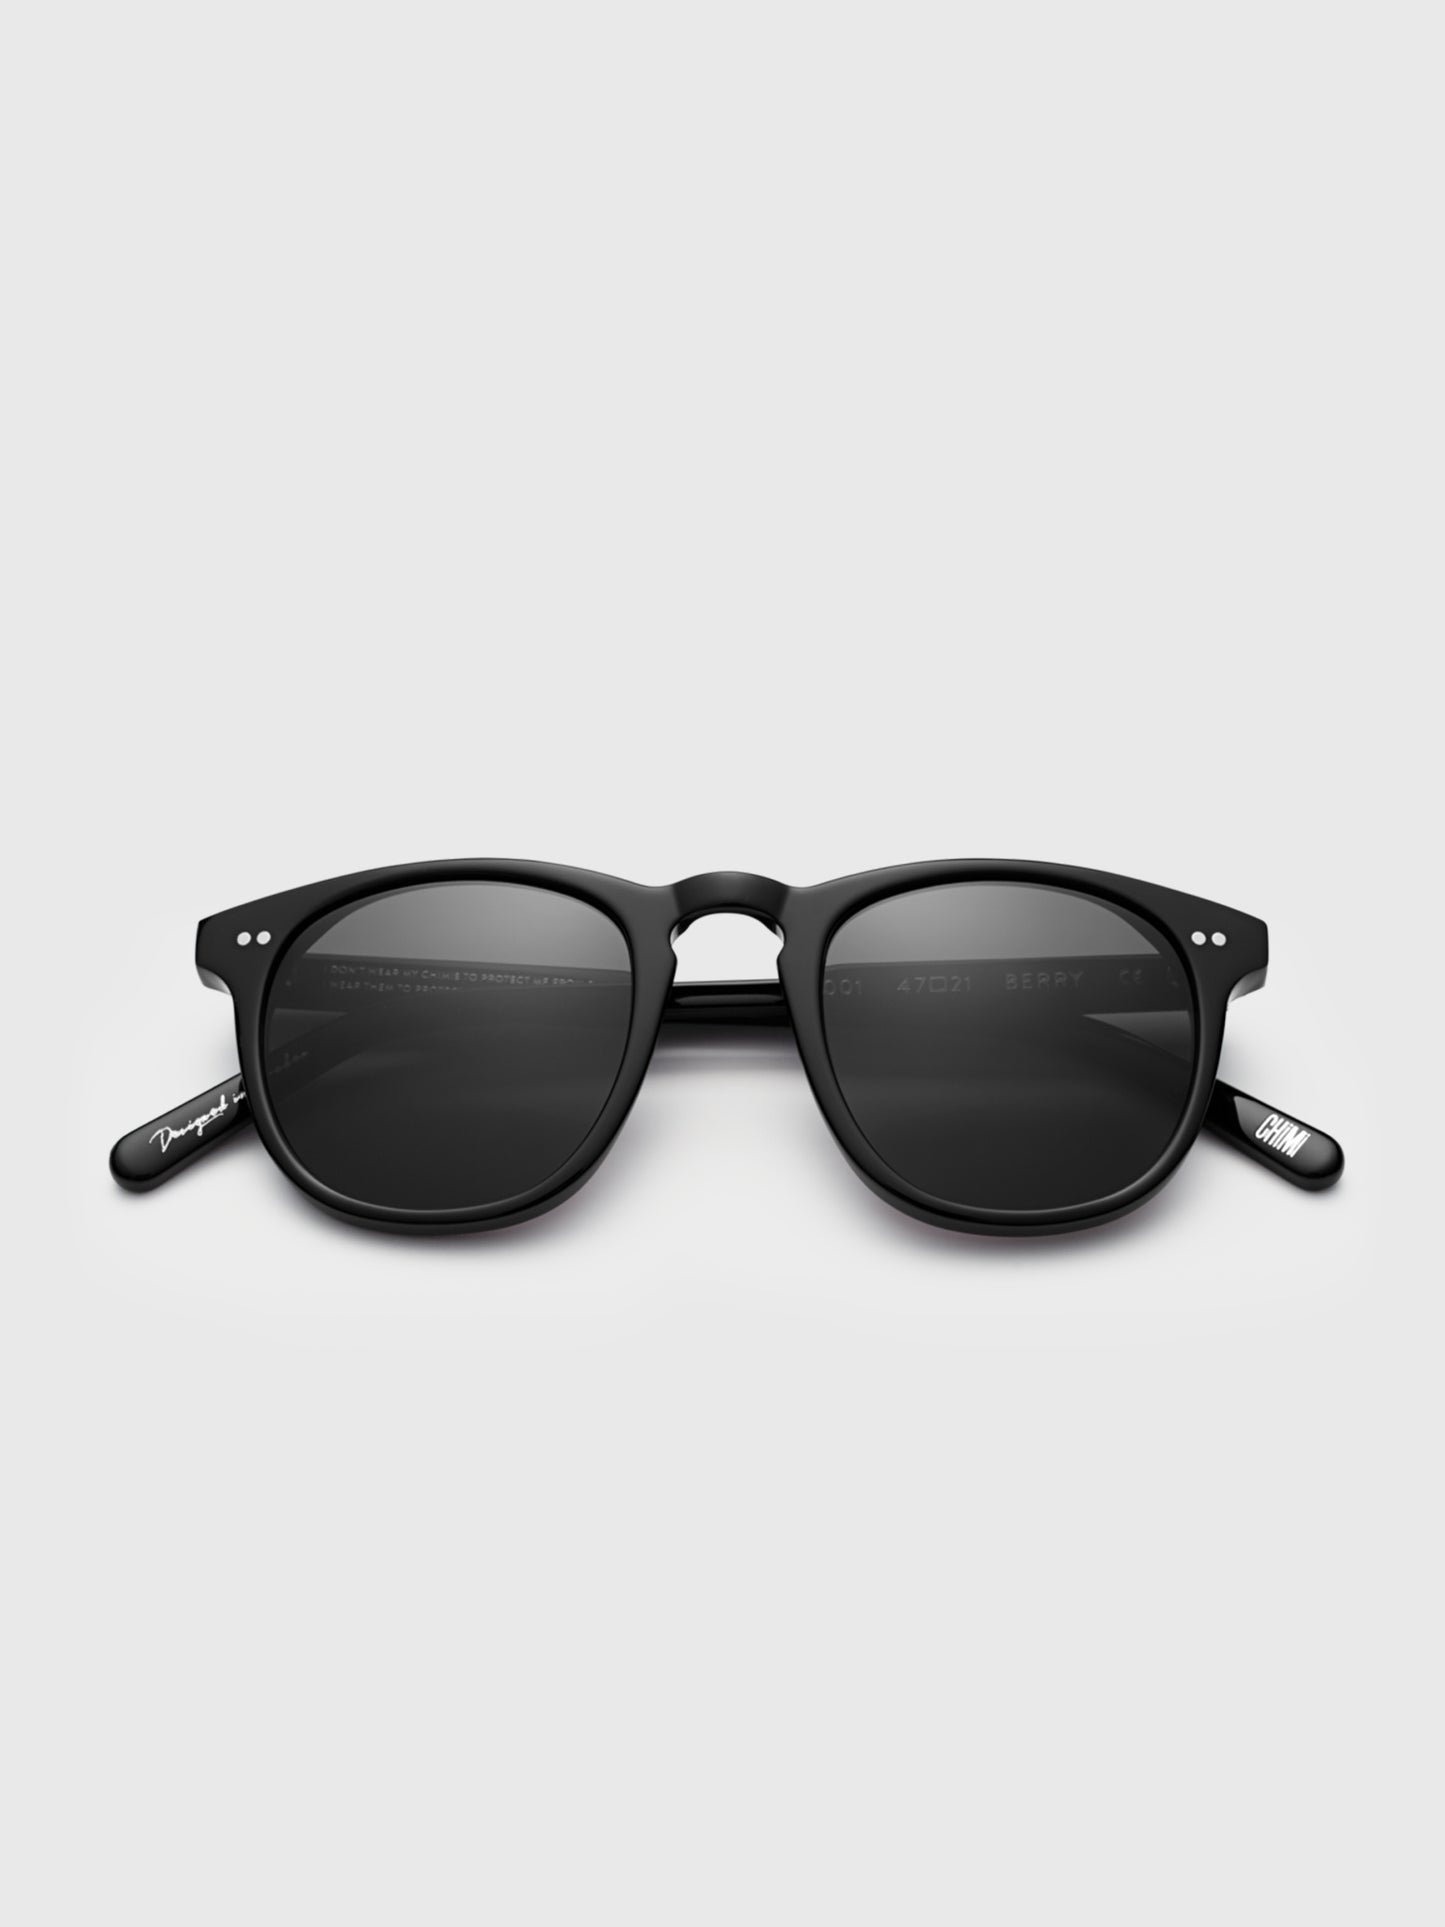 Chimi Berry #002 Black Sunglasses